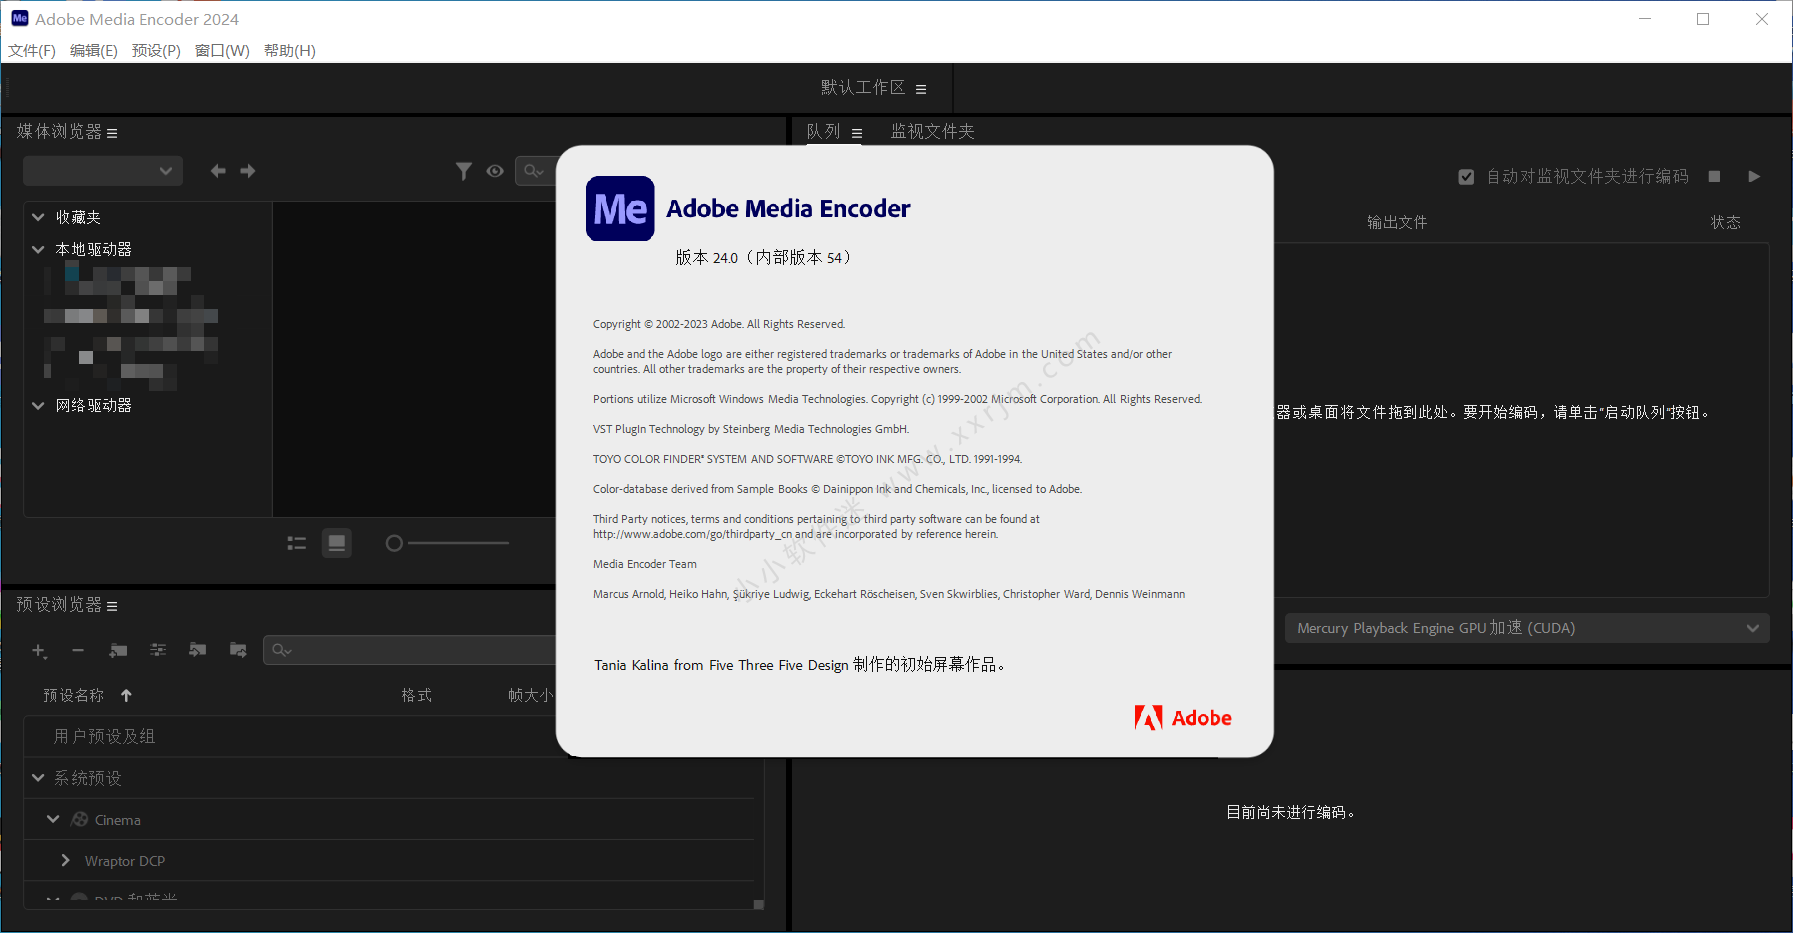 Adobe Media Encoder 2024 v24.0.0.54 download the new version for ios